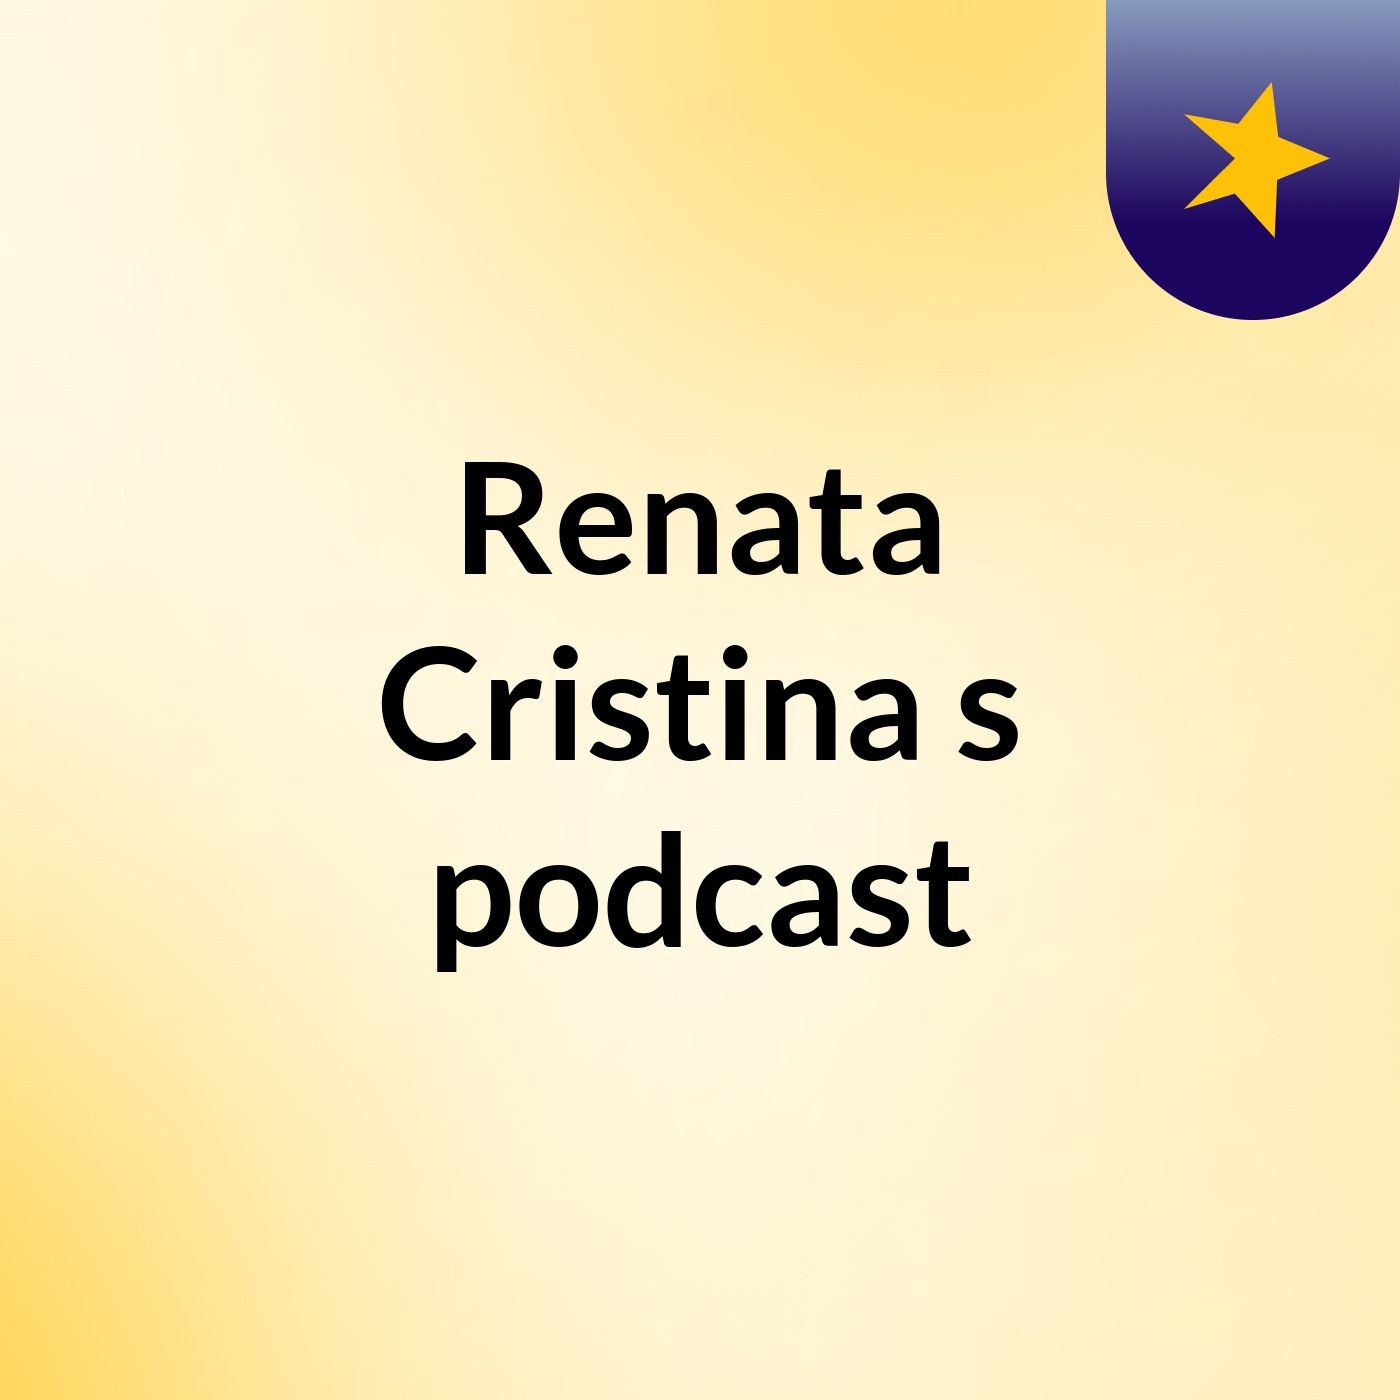 Renata Cristina's podcast